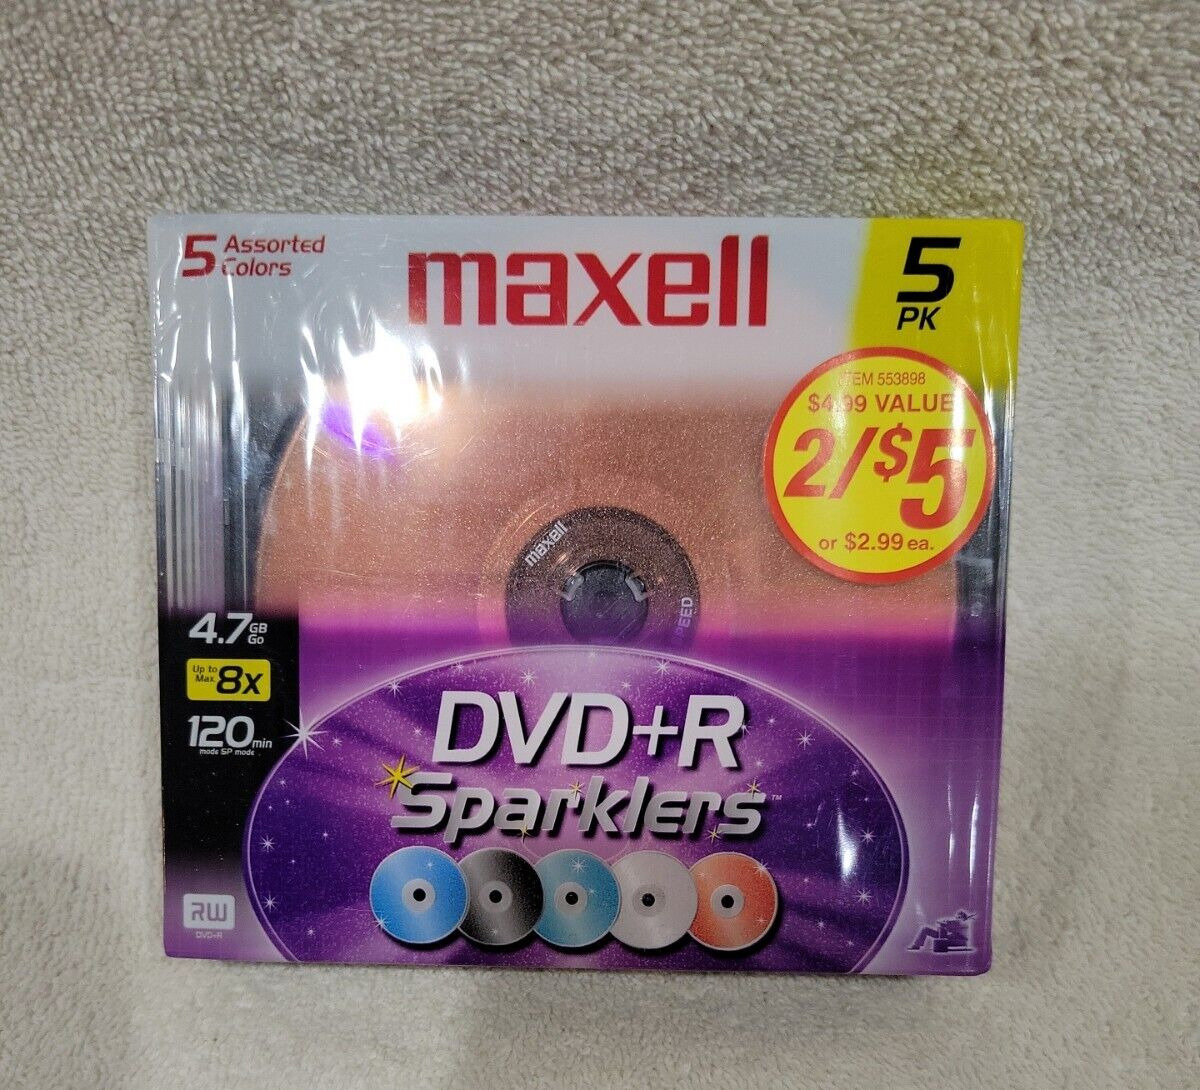 Maxell DVD+R Sparkler 5-pack Blank Media - New in Package 